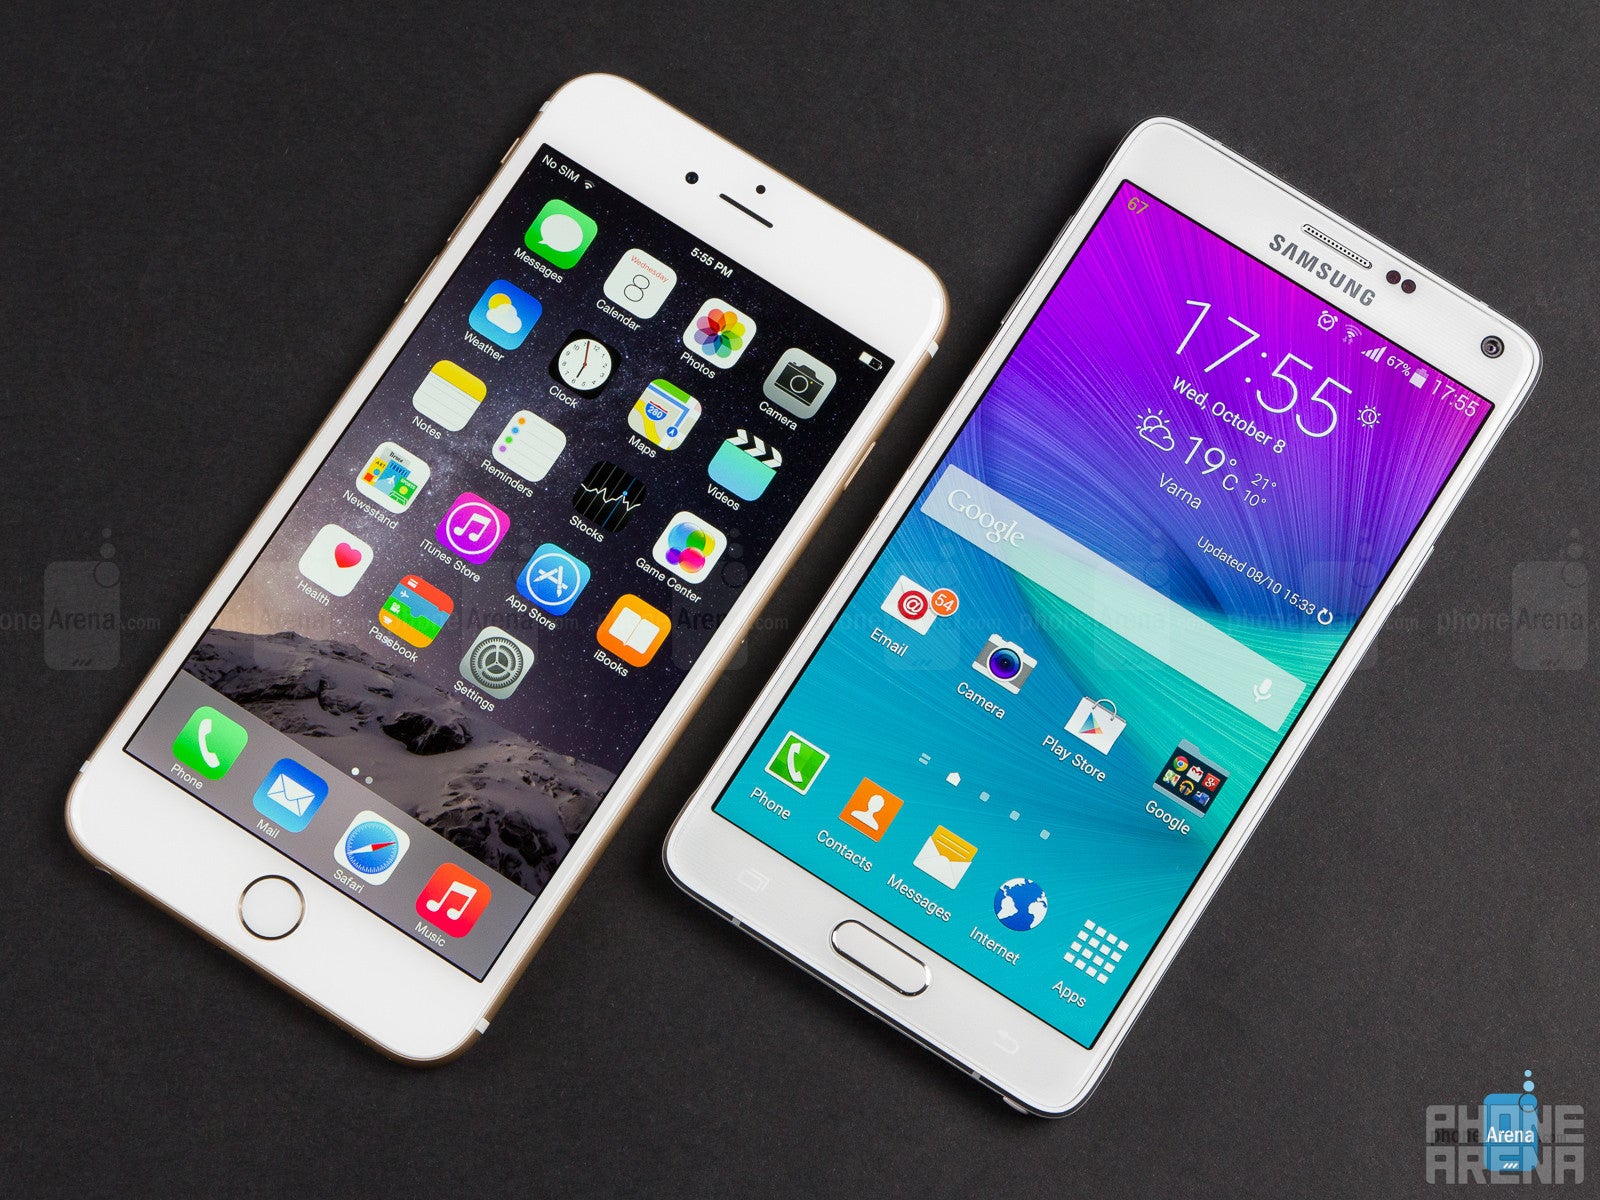 Samsung Galaxy Note 4 vs Apple iPhone 6 Plus